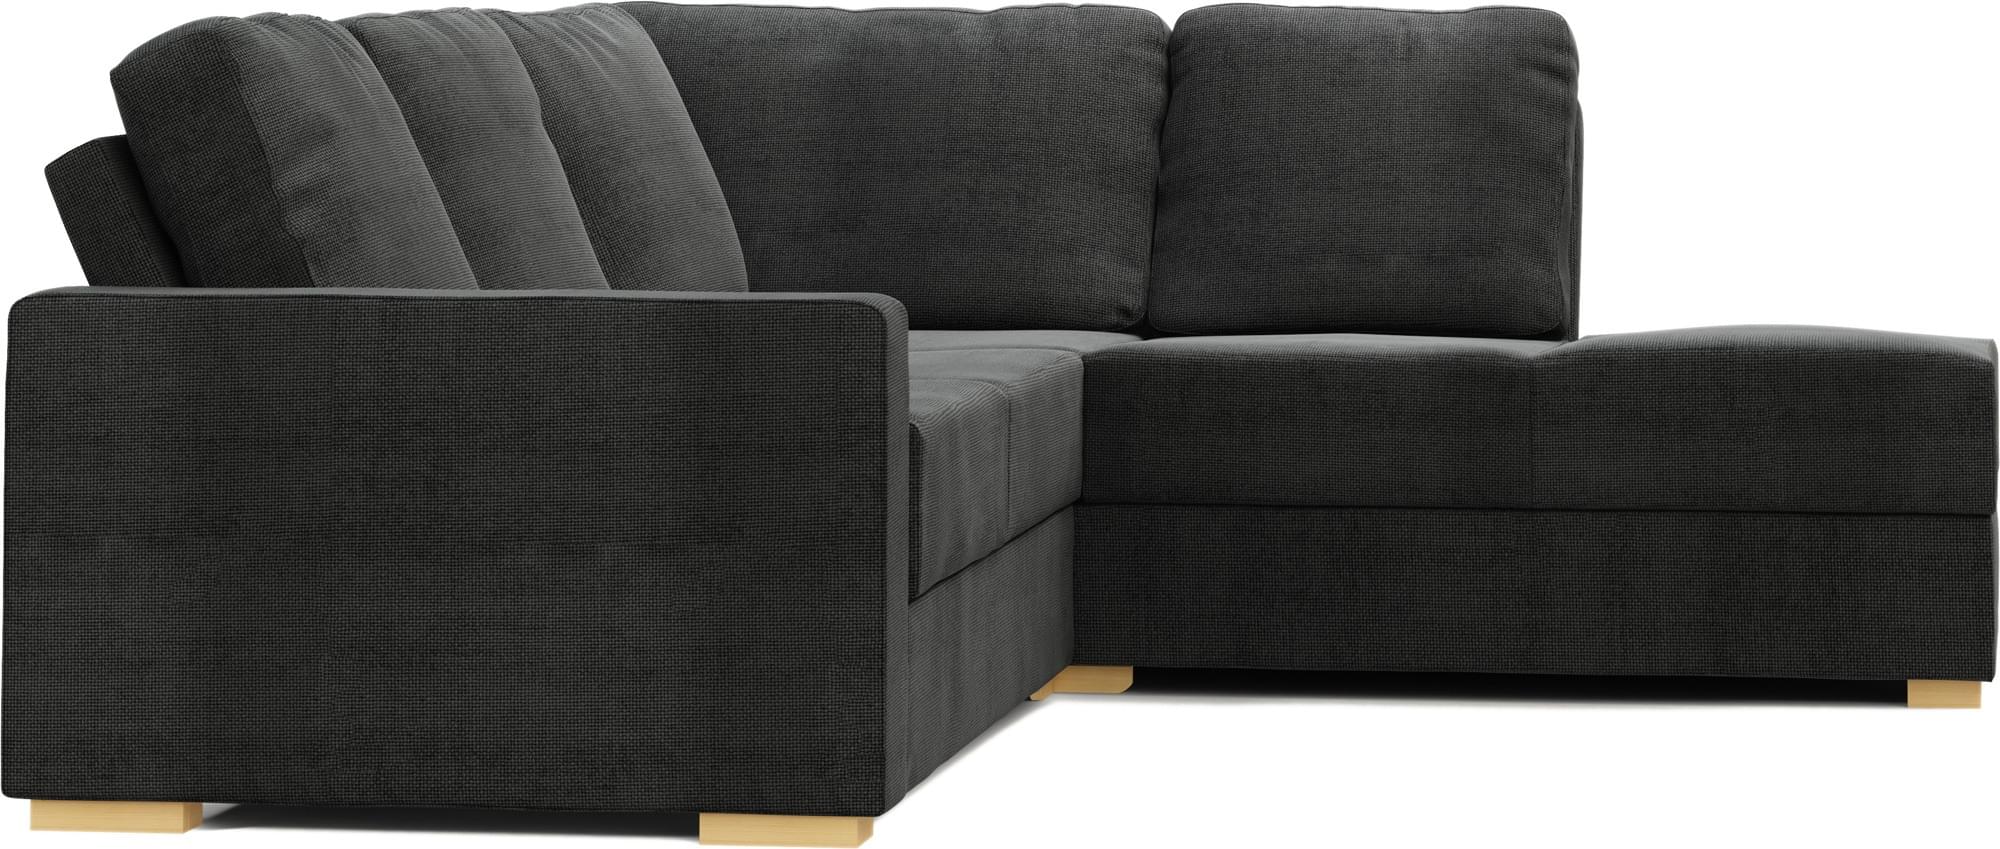 Lear Chaise 3X3 Single Sofa Bed